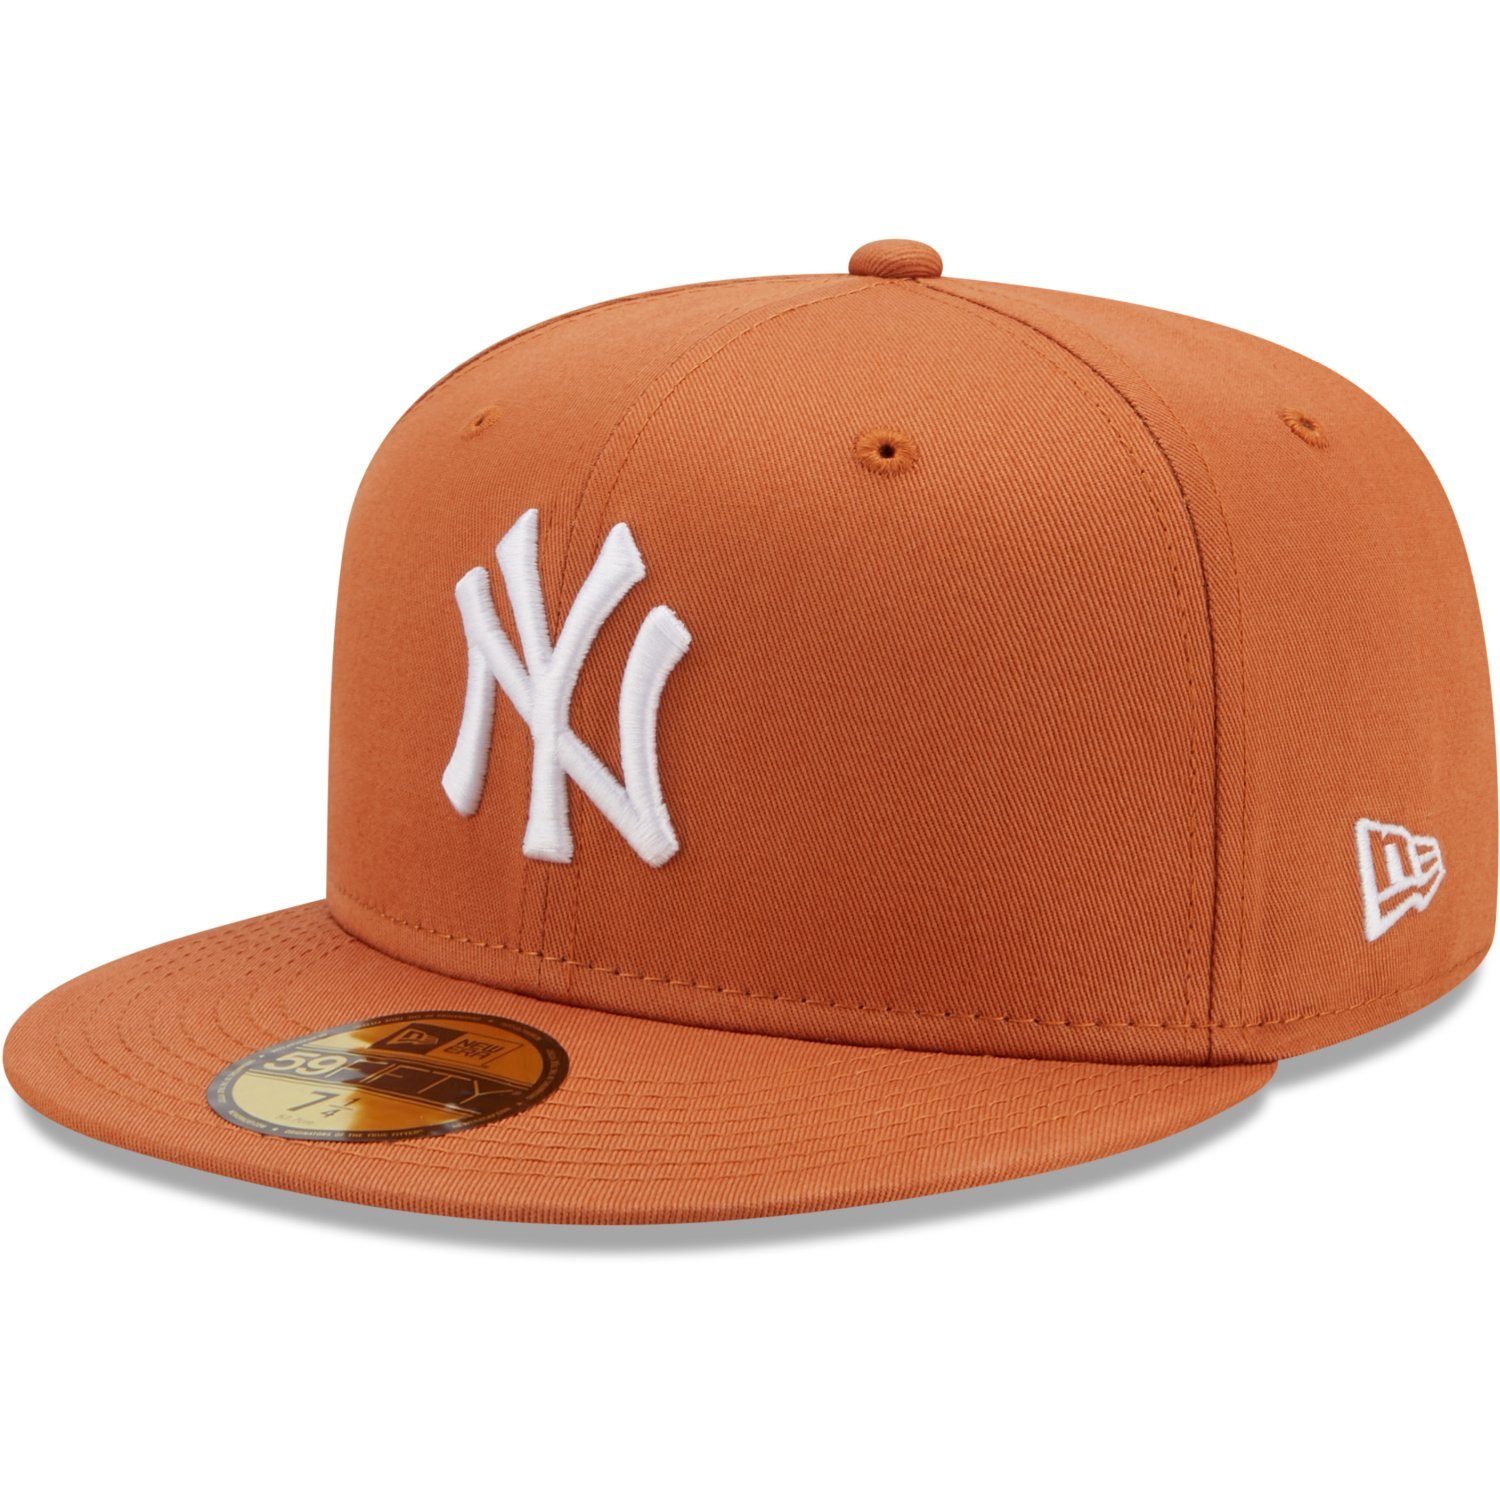 New Era Fitted Cap 59Fifty New York Yankees braun